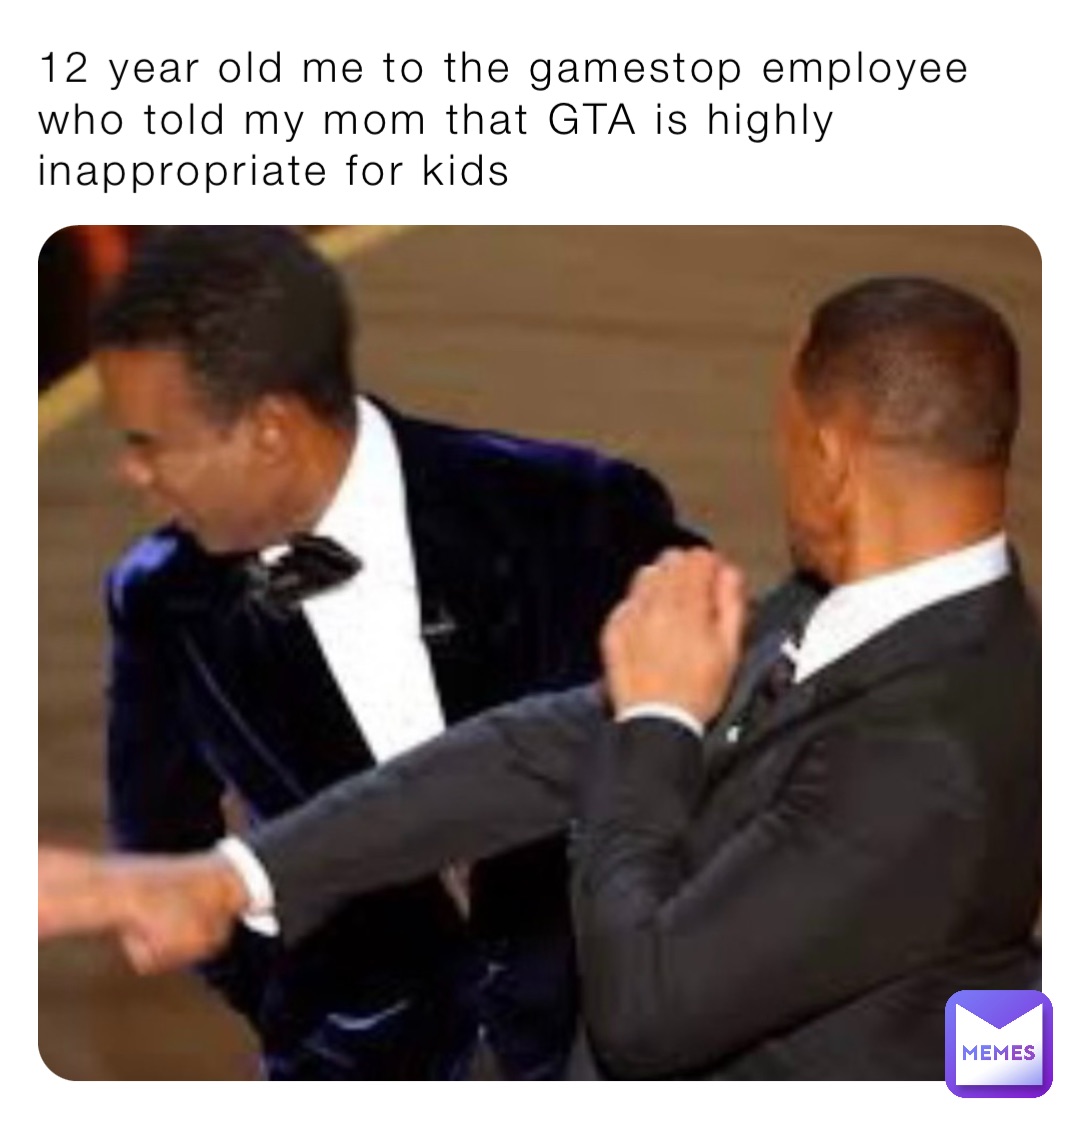 gamestop employee meme